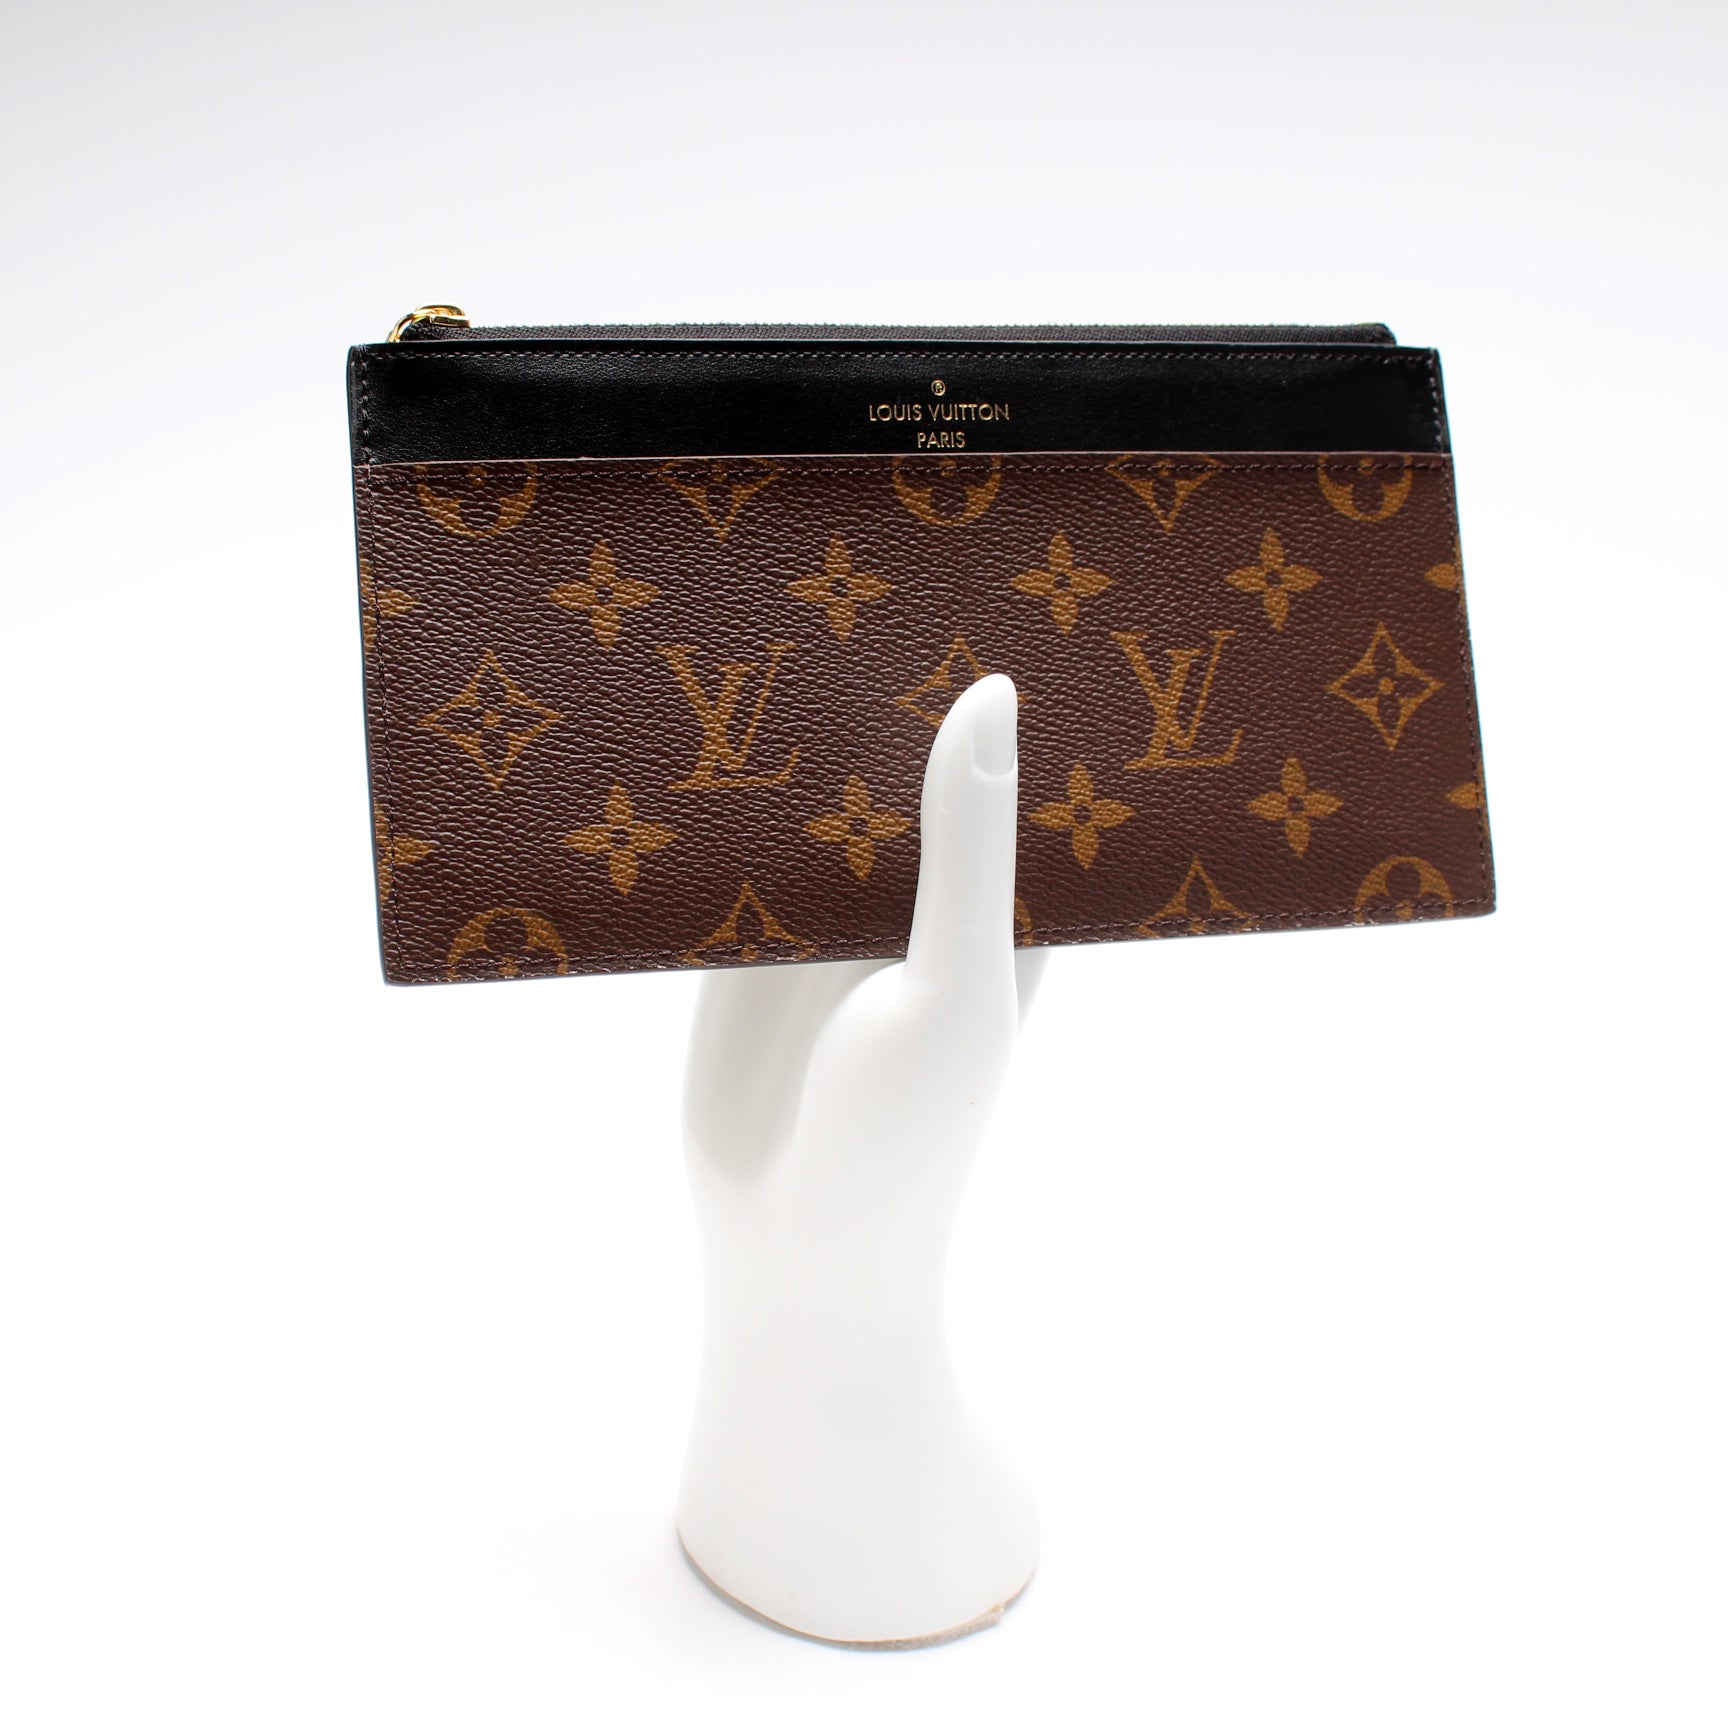 Louis Vuitton - Slim Purse - Monogram Canvas - Black - Women - Luxury